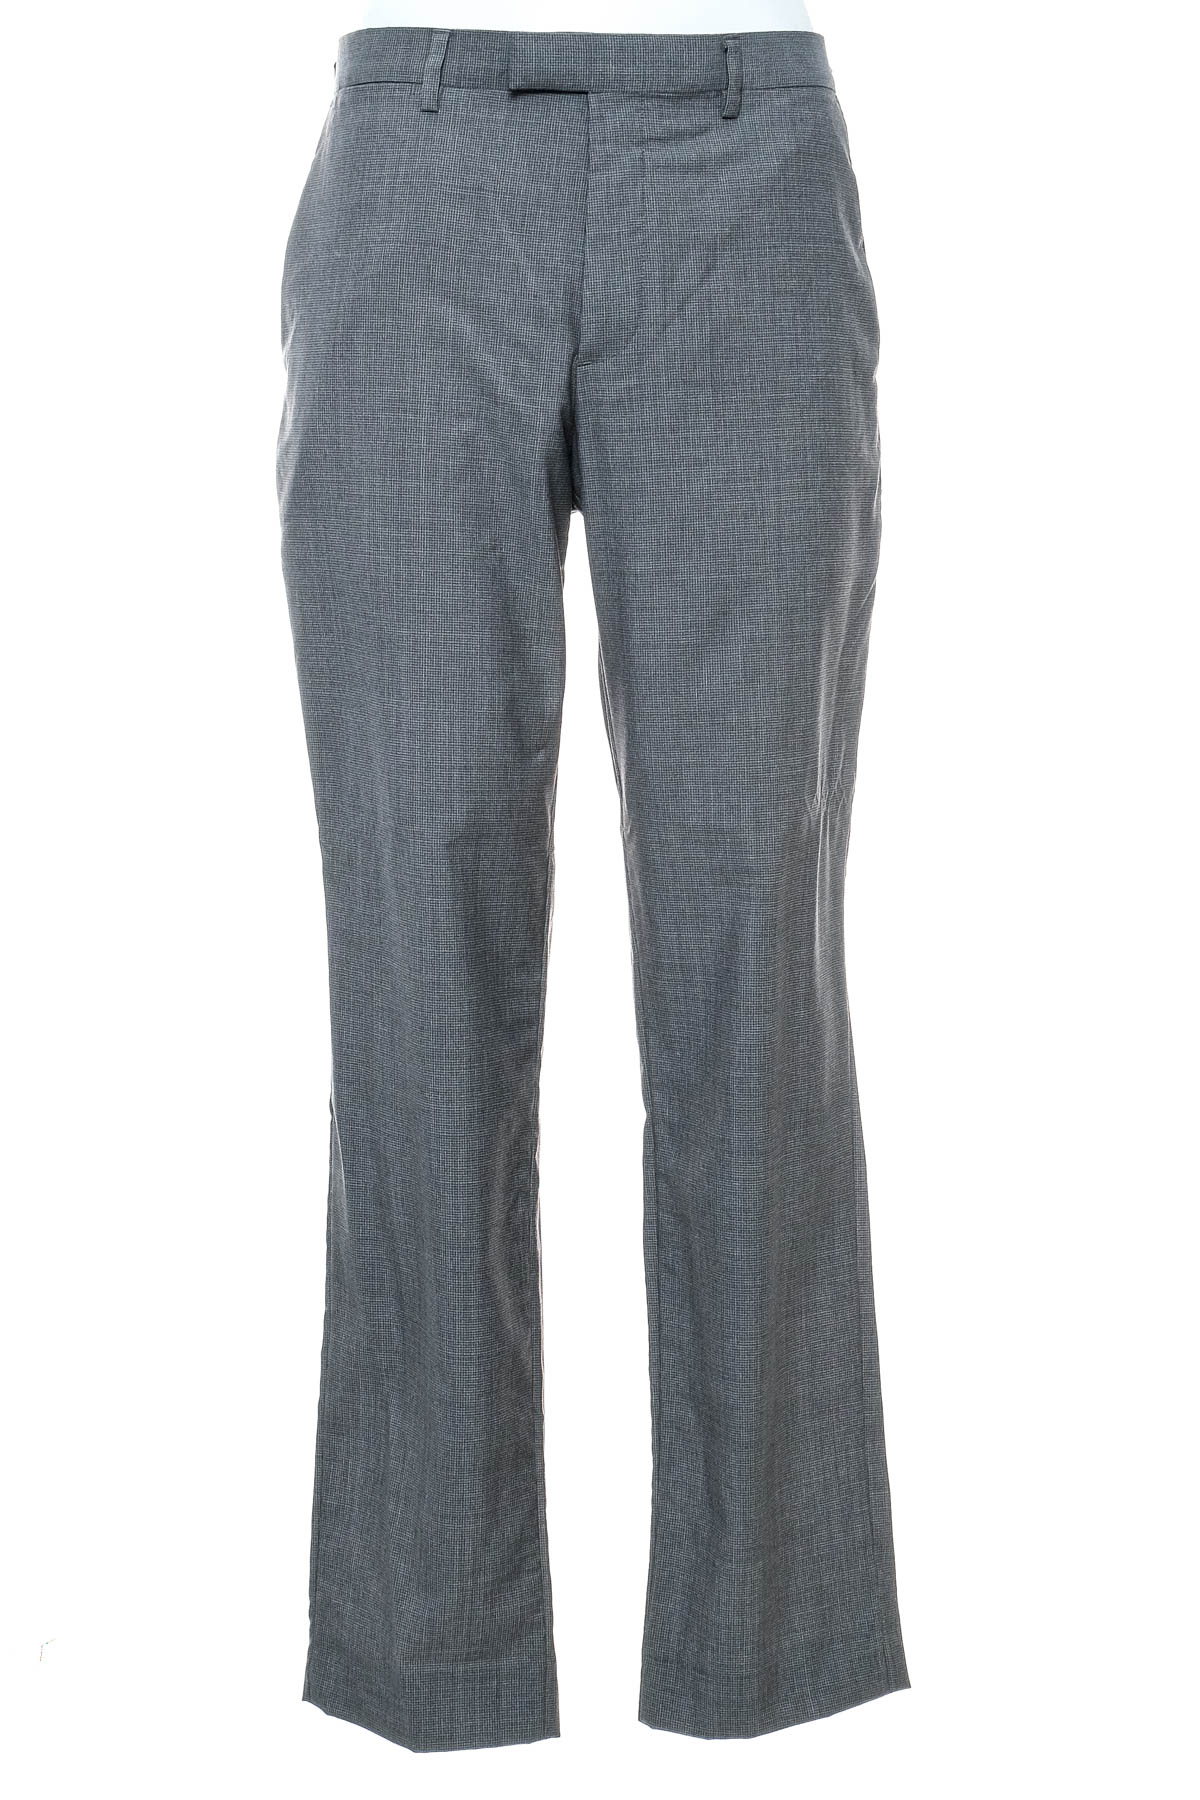 Pantalon pentru bărbați - BANANA REPUBLIC - 0